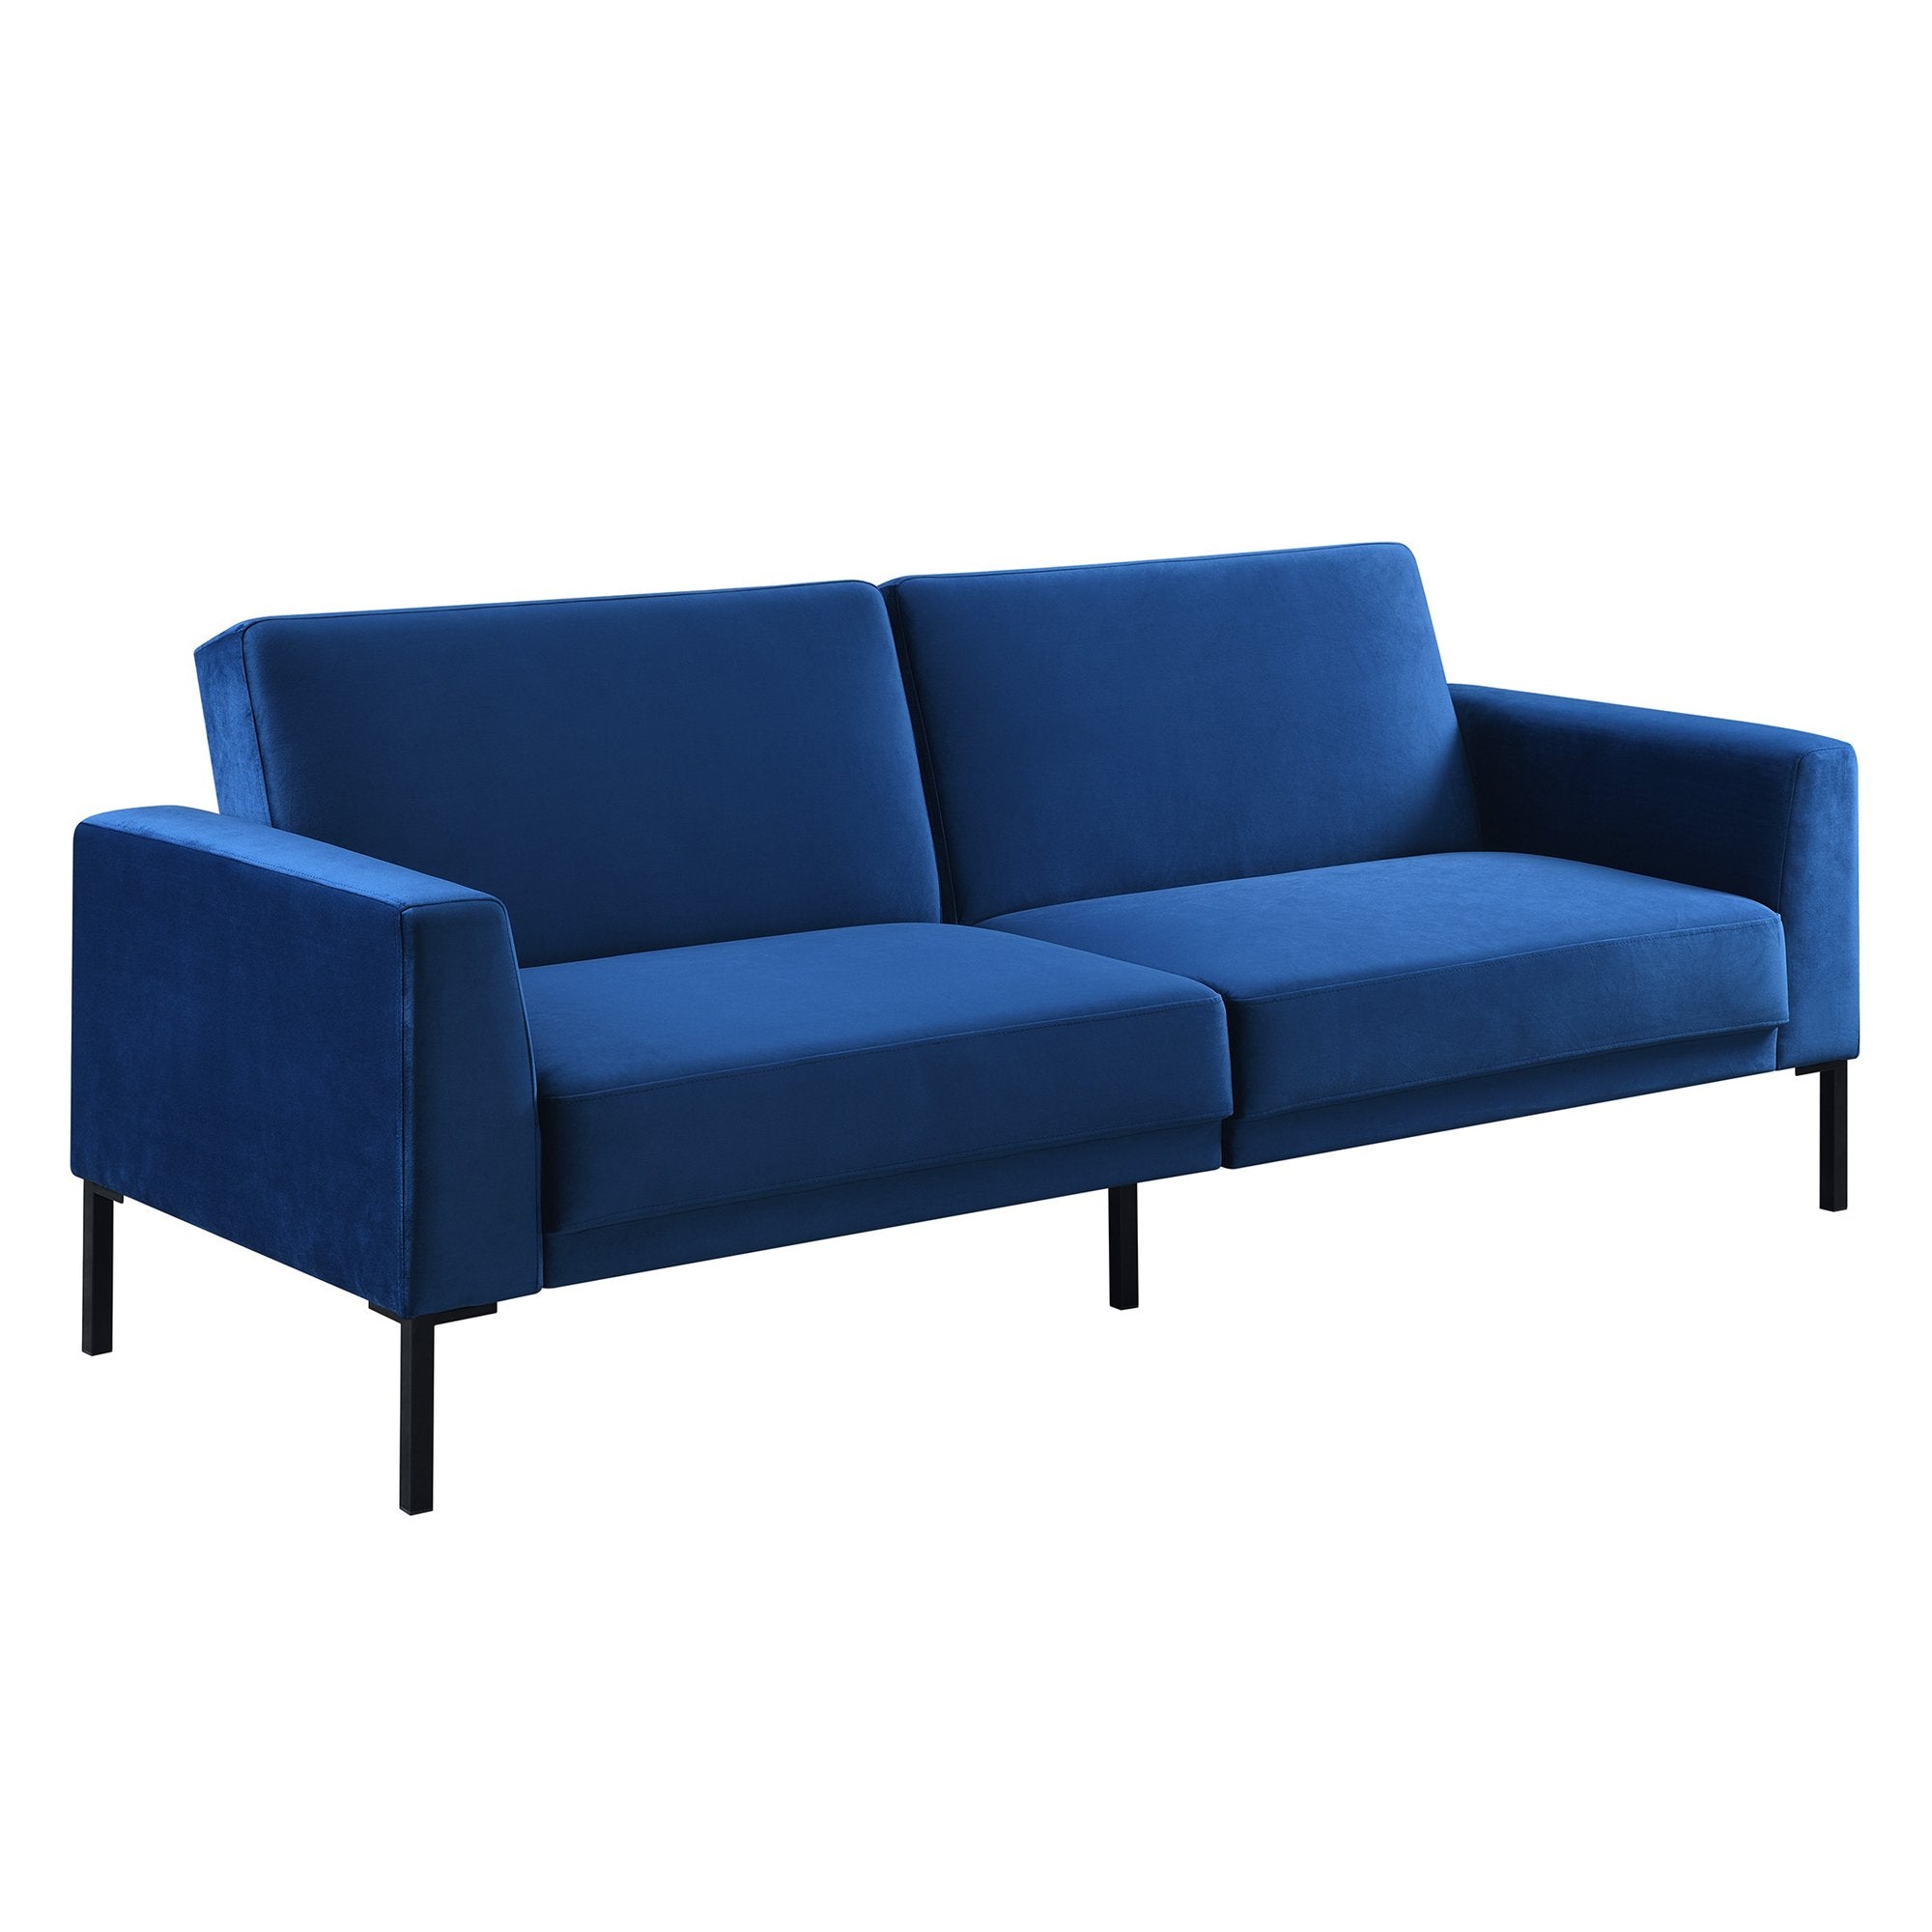 Velvet Upholstered Modern Convertible Folding Futon Sofa Bed for Compact Living Space, Apartment, Dorm